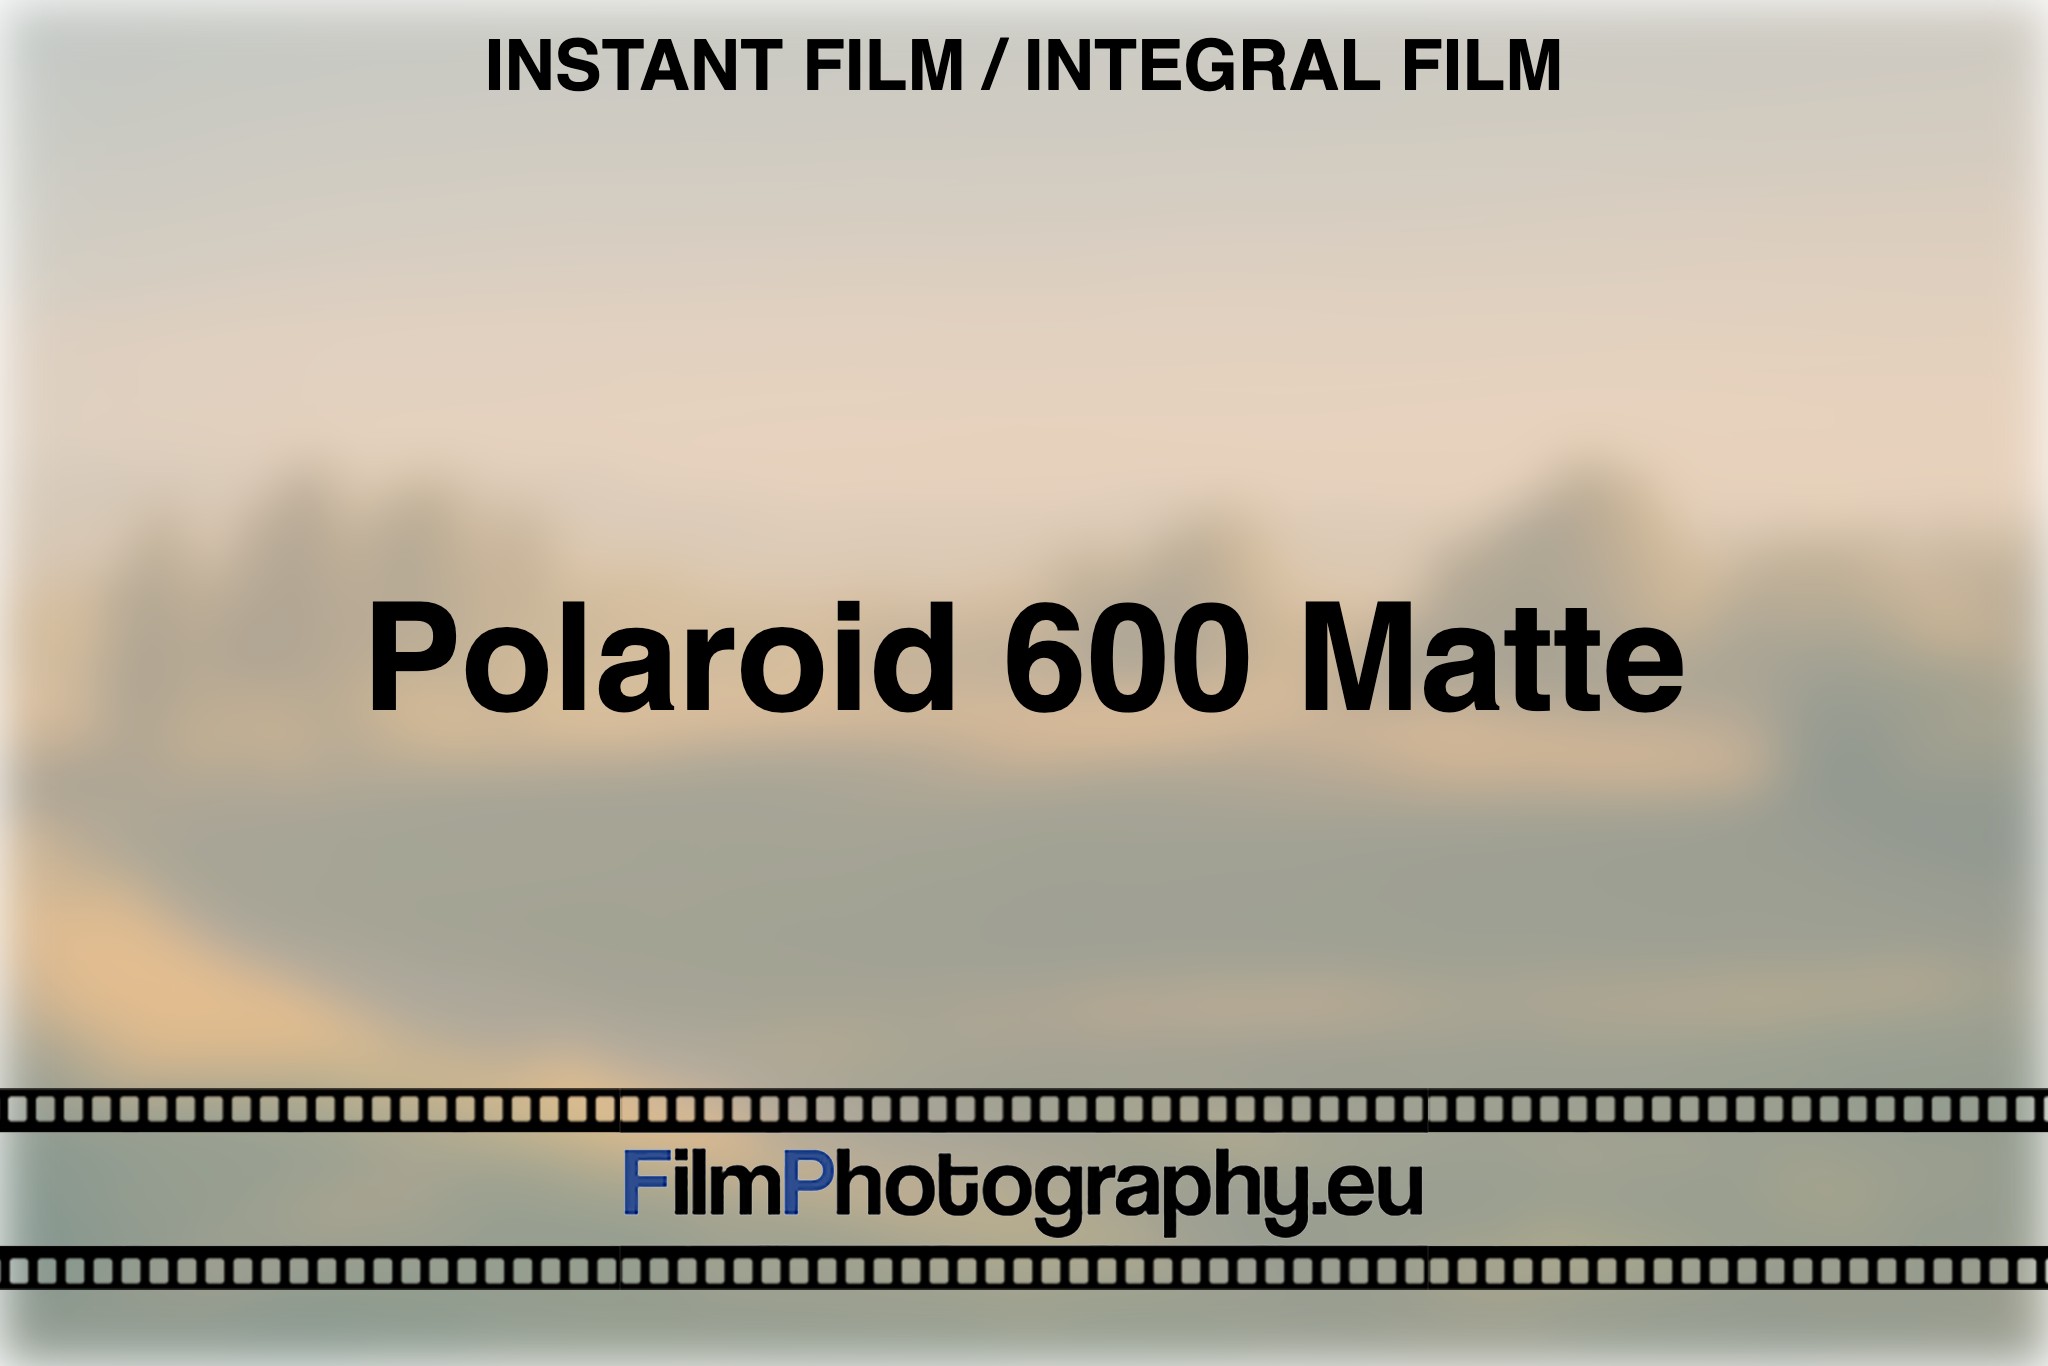 polaroid-600-matte-instant-film-integral-film-bnv